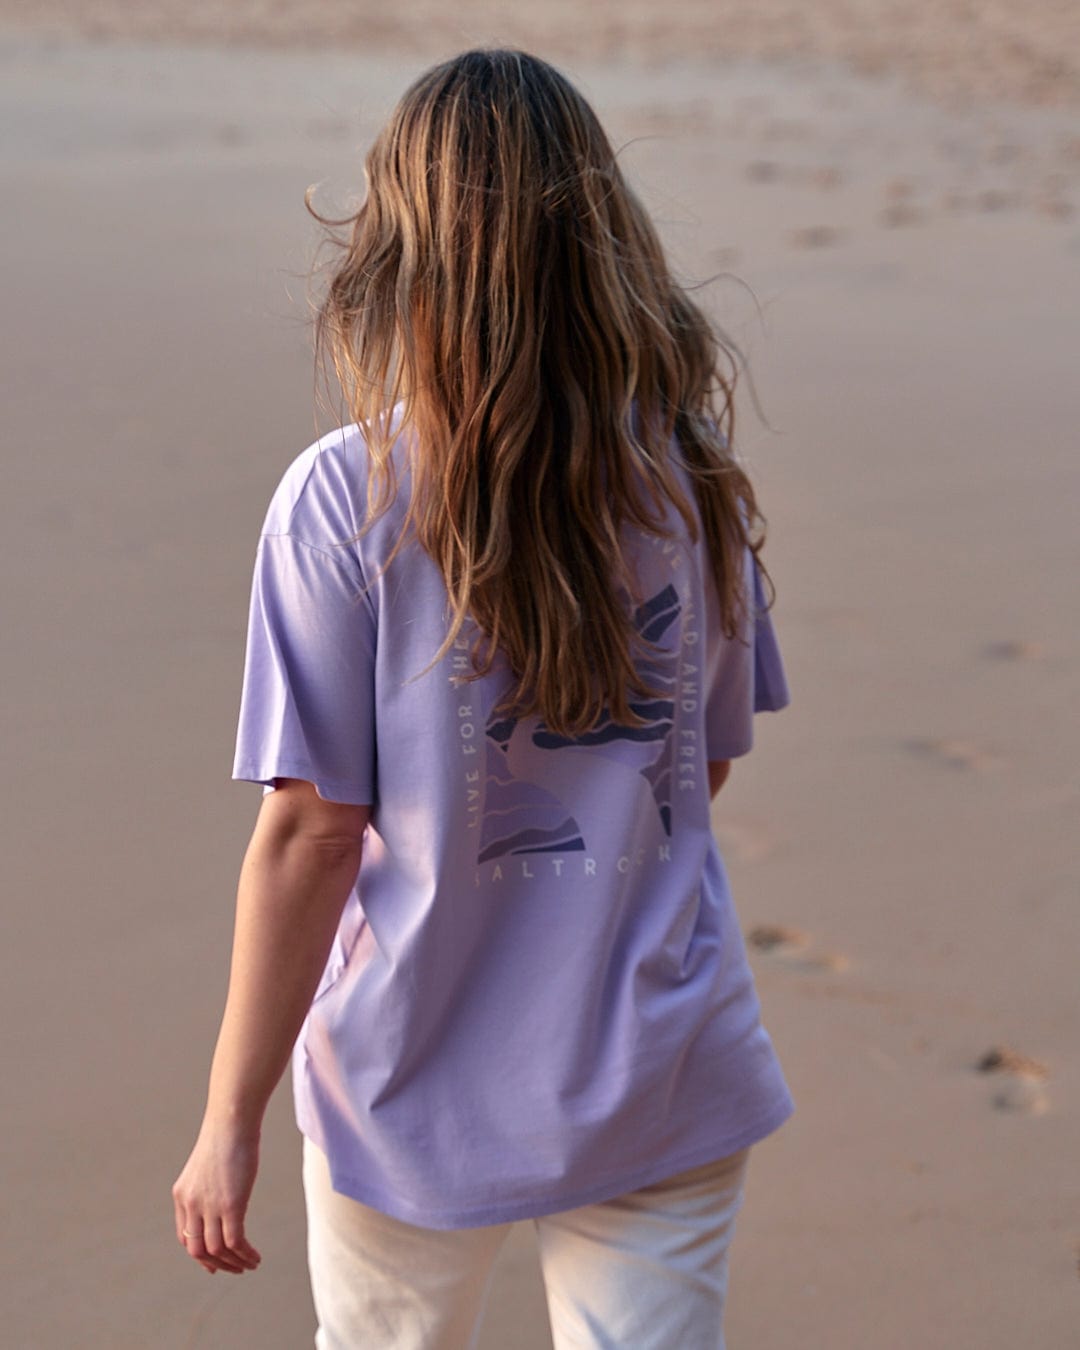 A woman walking on the beach wearing a Saltrock Live Wild - Womens Short Sleeve T-Shirt - Light Purple.